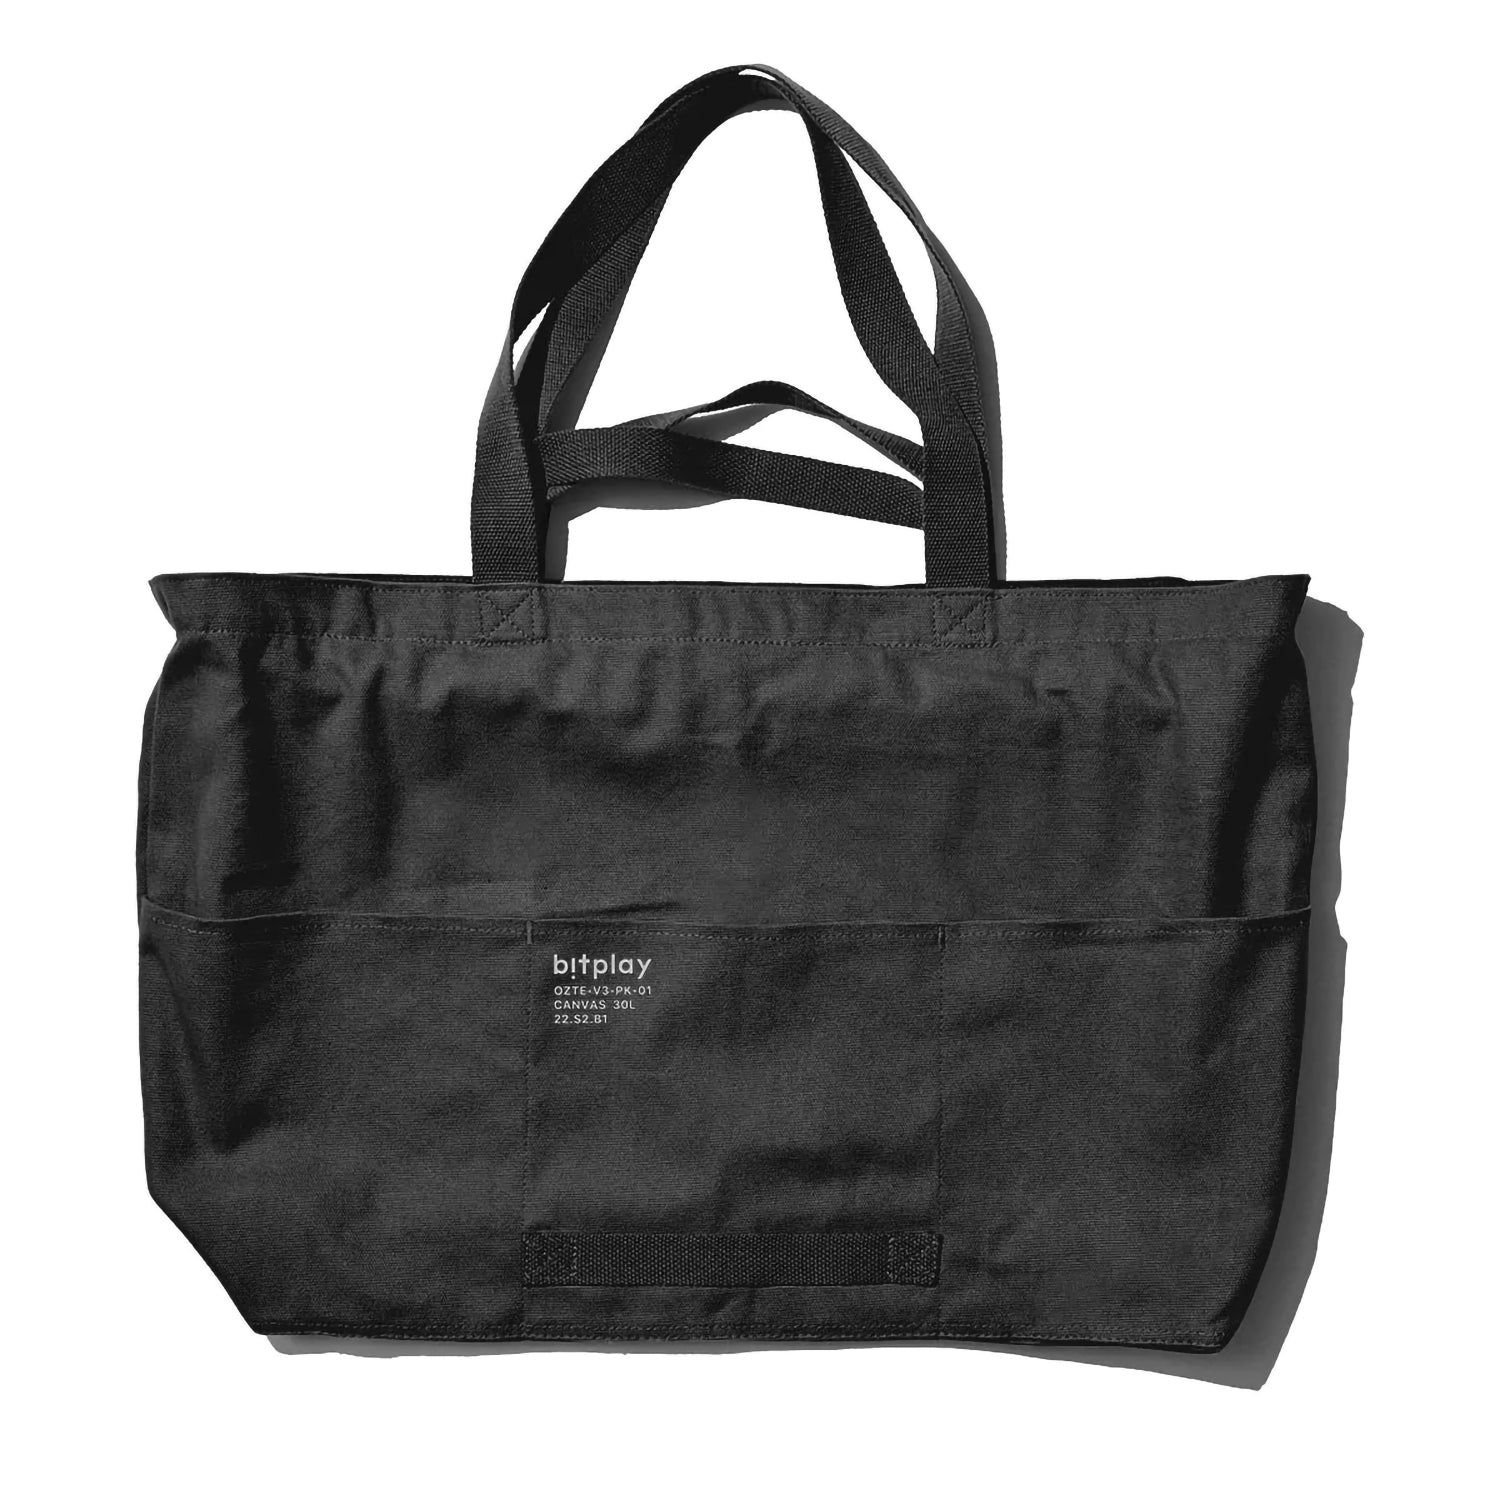 Bitplay Oversize Tote Bag Tote Bags Bitplay Black 